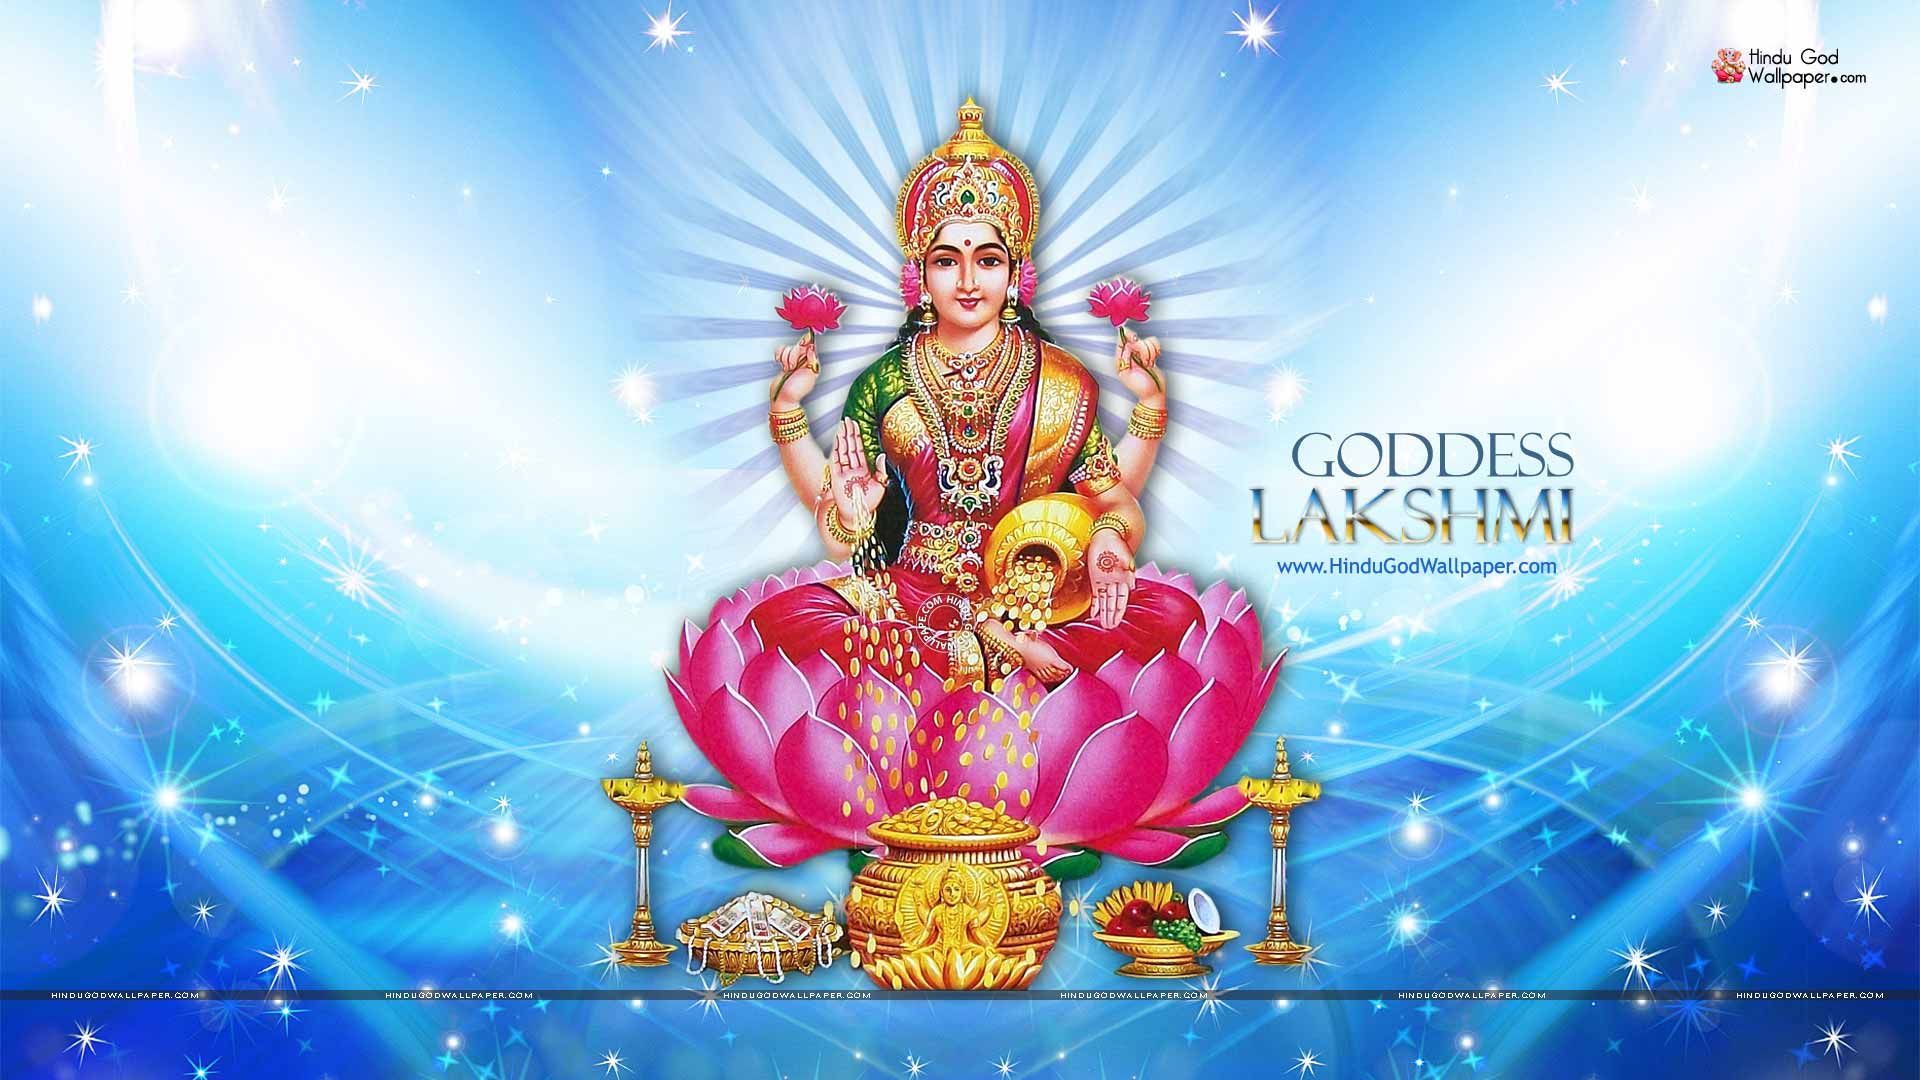 God Lakshmi Image Full HD Wallpaper In